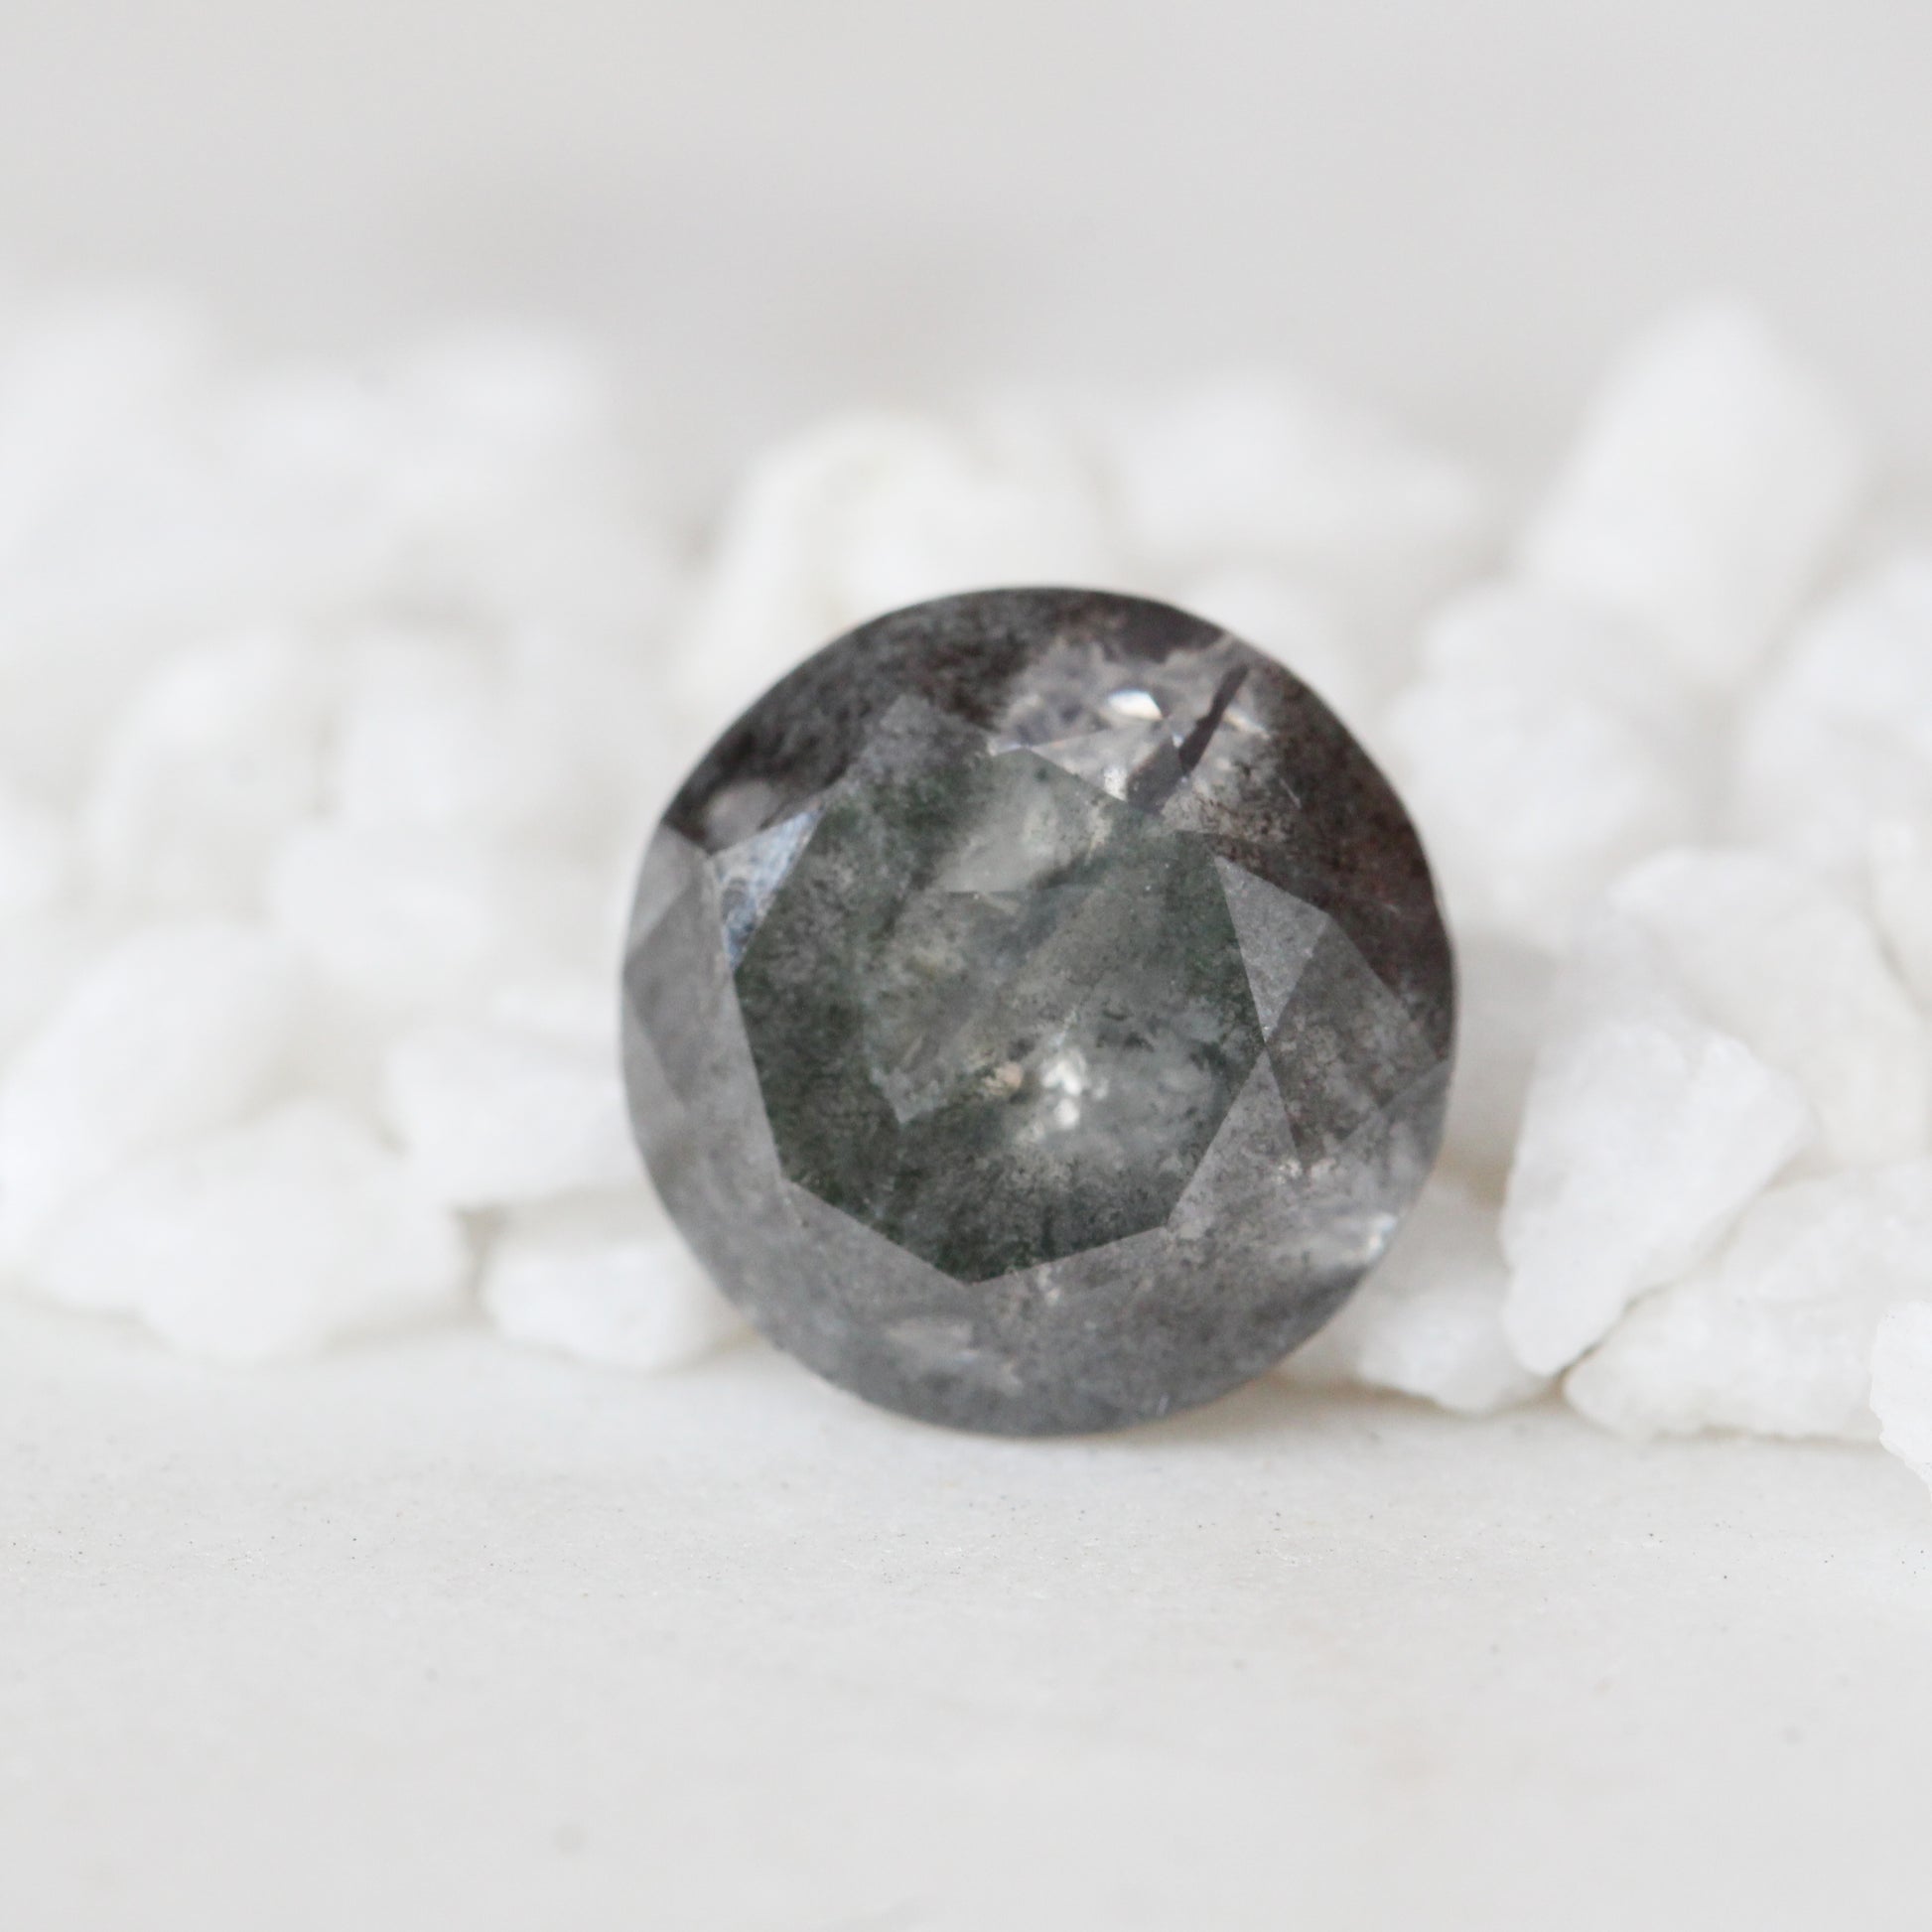 5.22 Carat Round Dark Celestial Diamond for Custom Work - Inventory Code RDCD522 - Midwinter Co. Alternative Bridal Rings and Modern Fine Jewelry